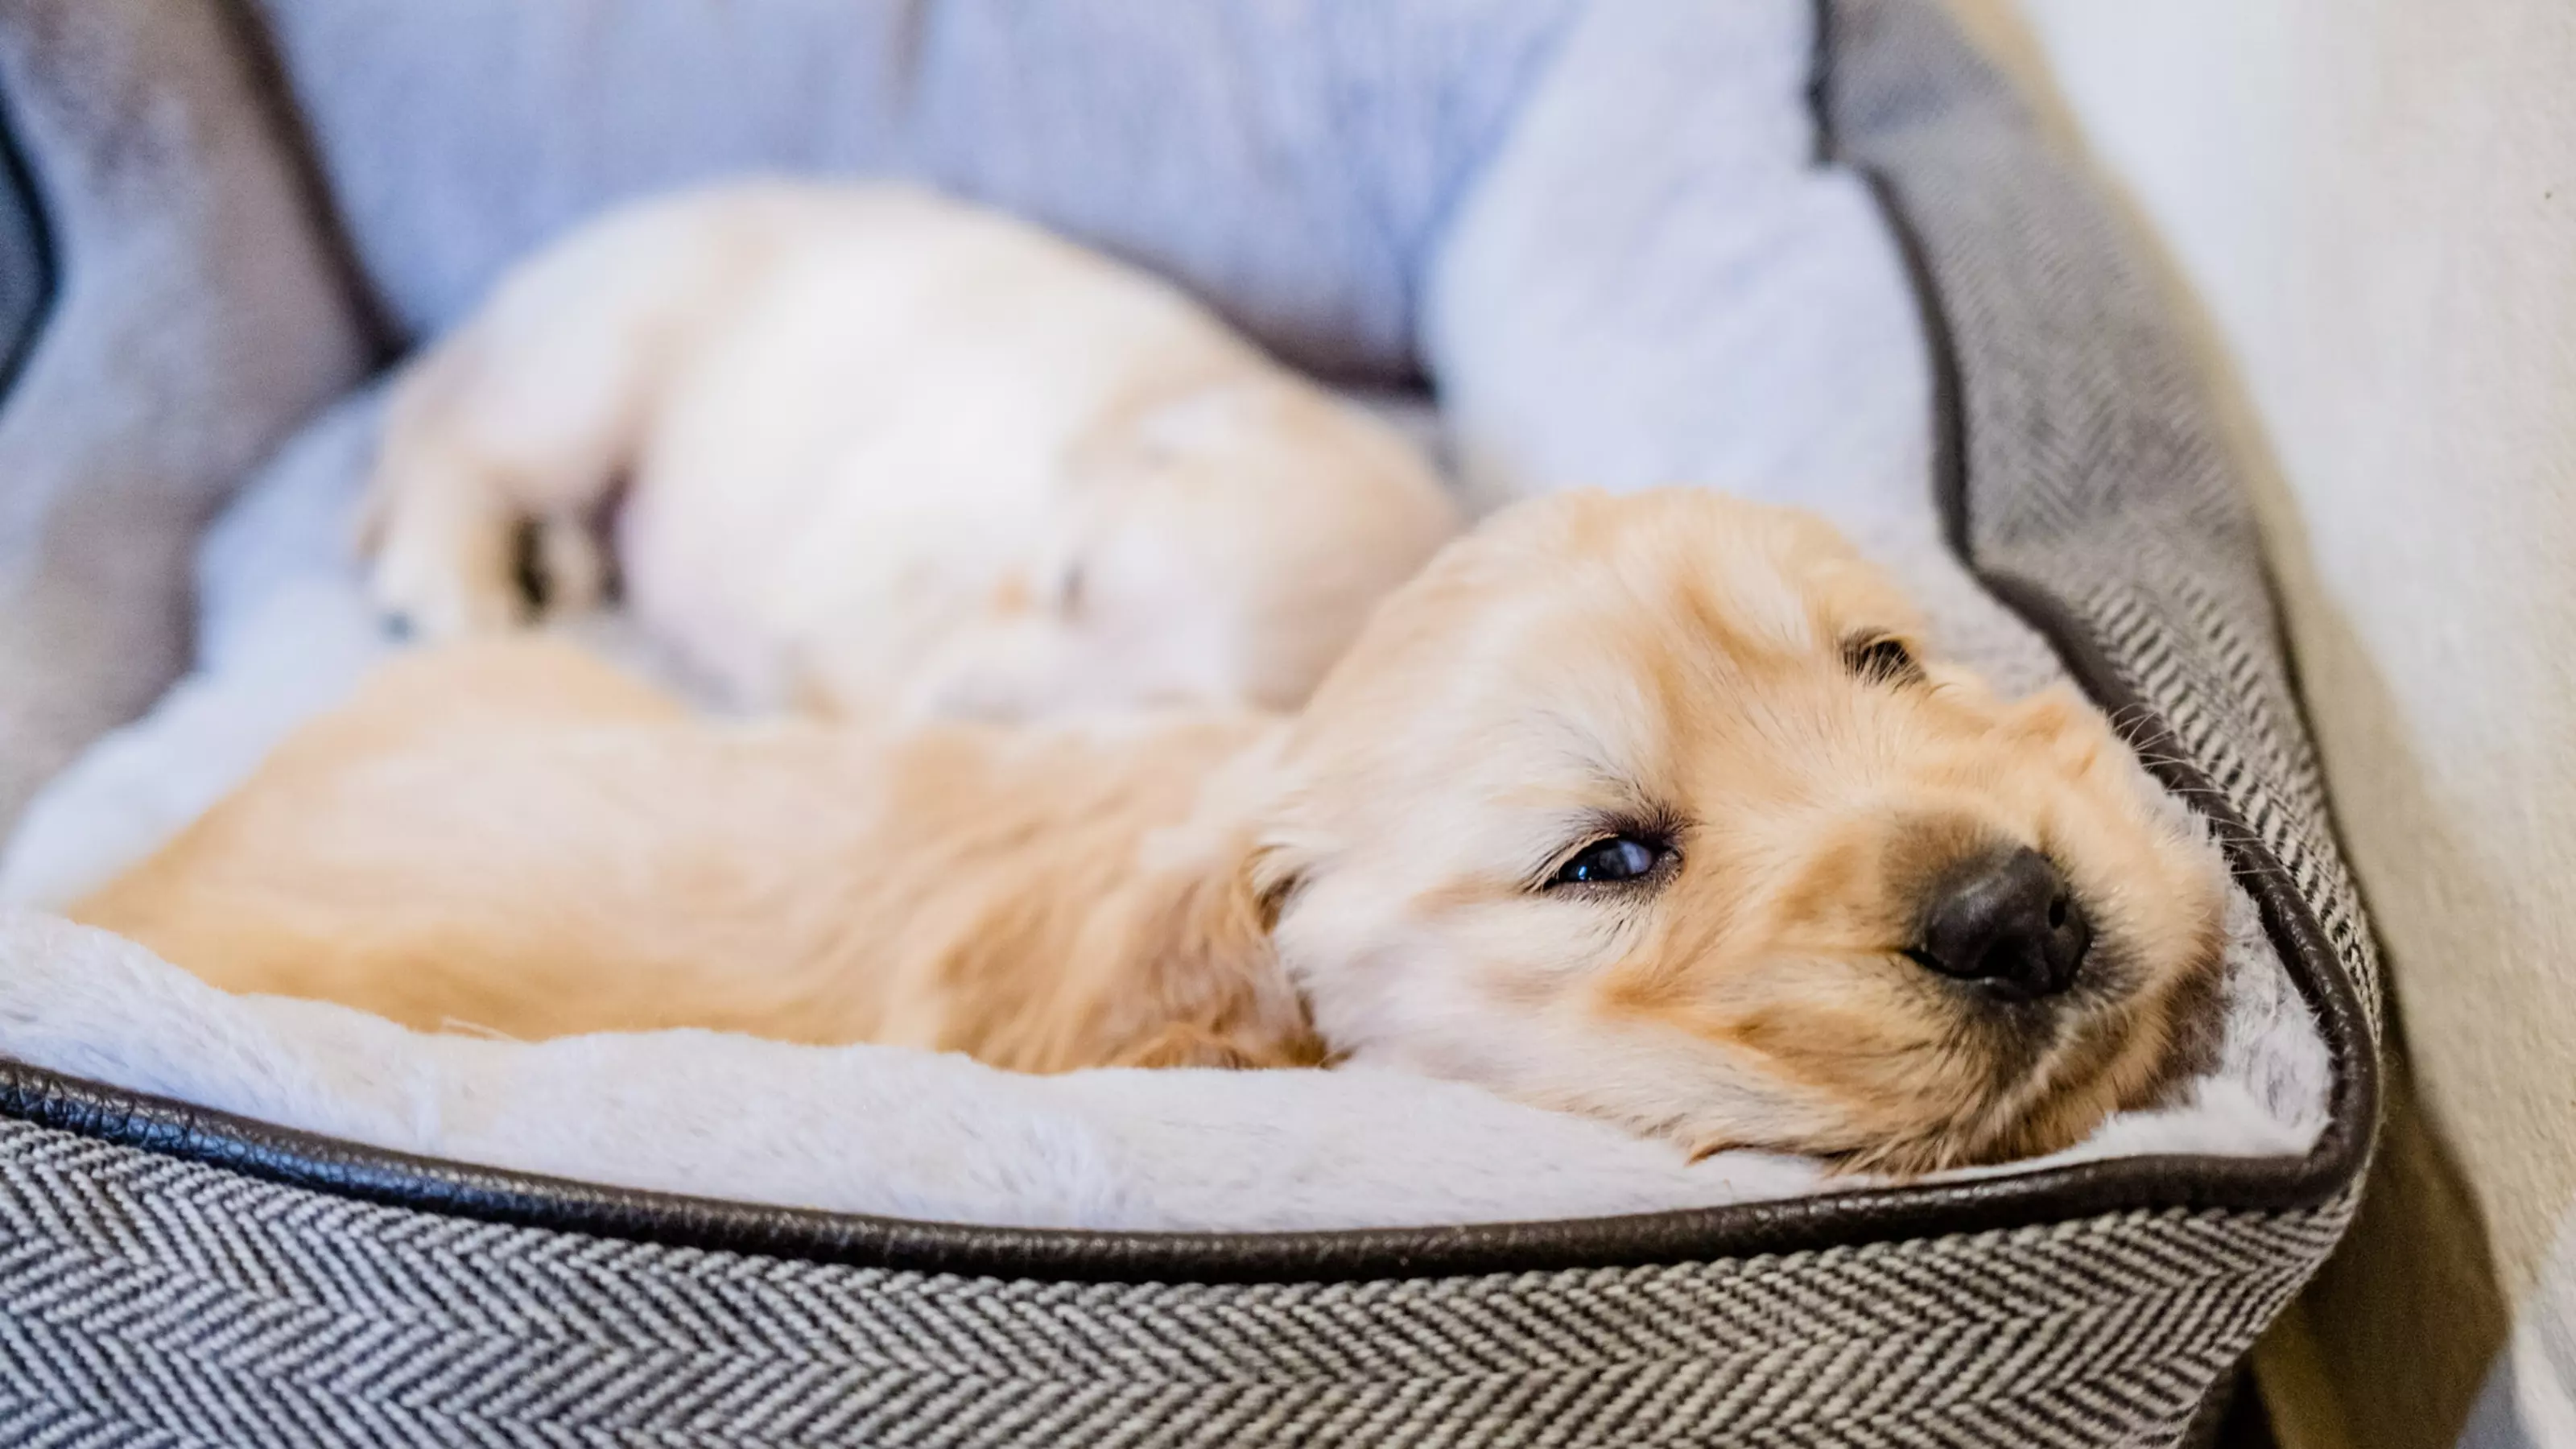 A golden retriever puppy in a puppy bed